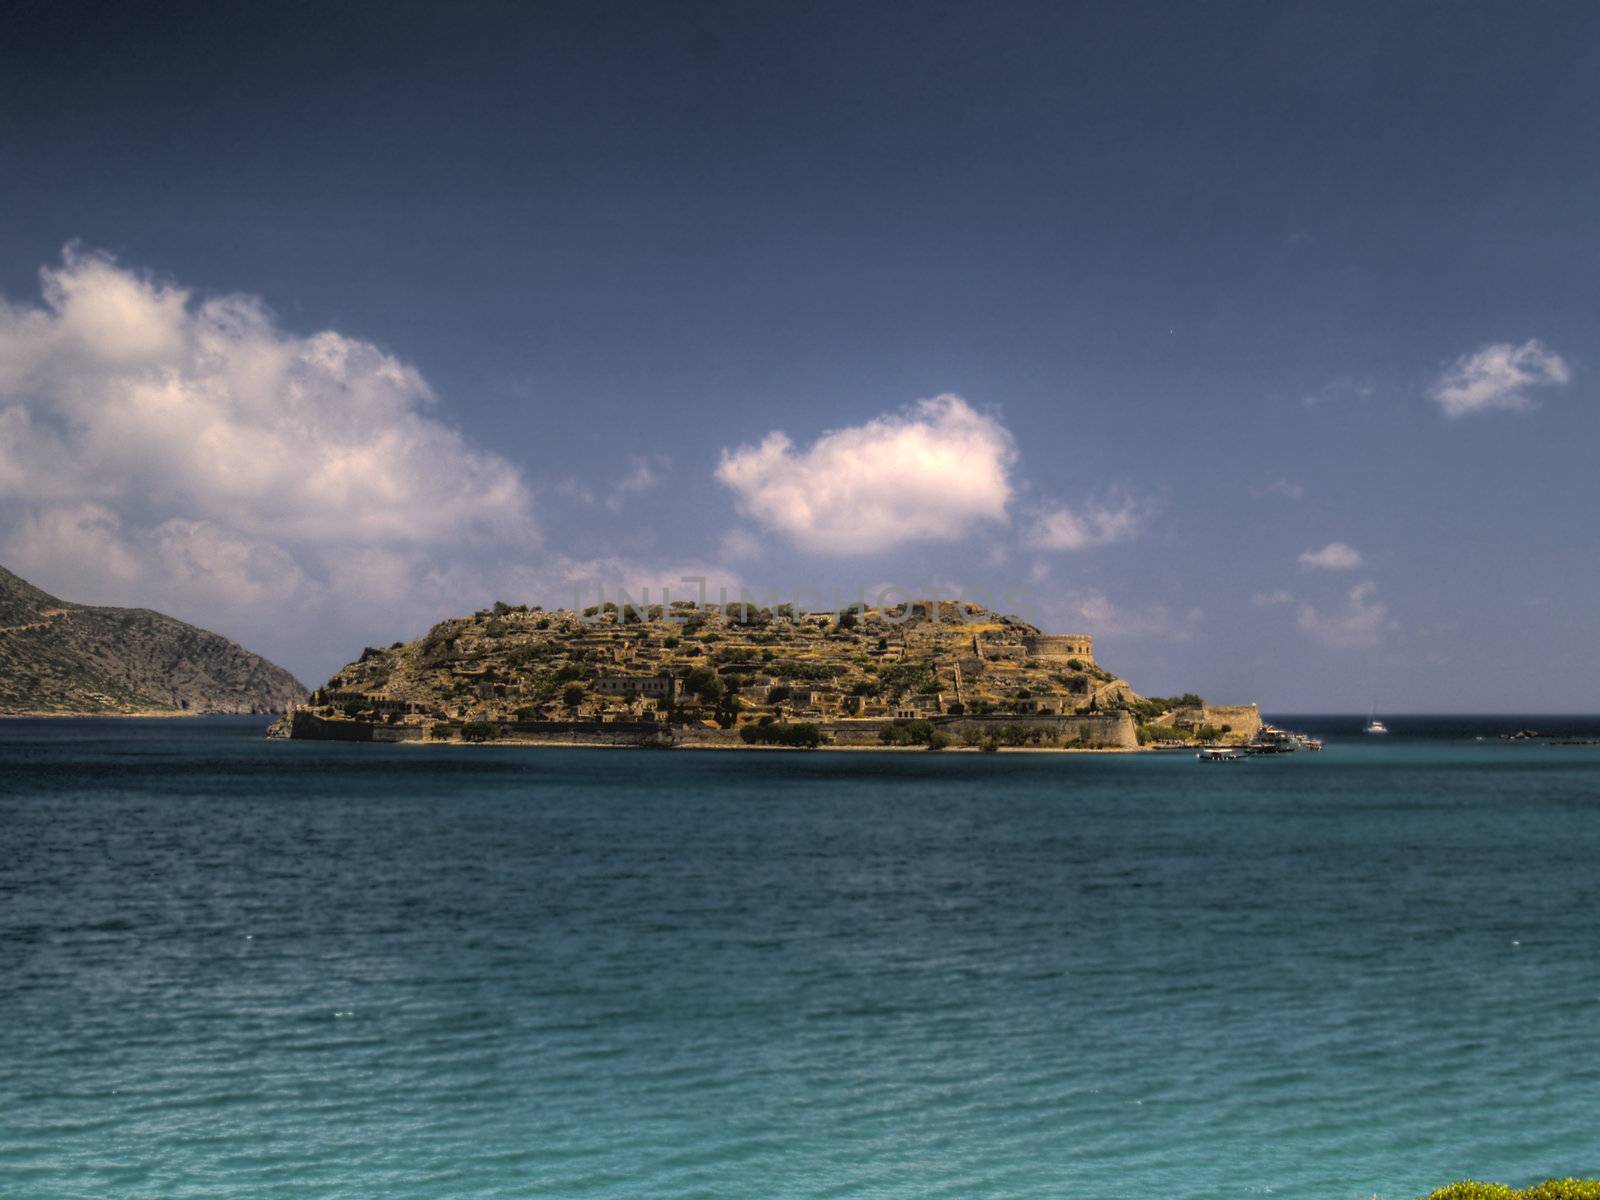 hdr style image of spinalonga island, crete, greece